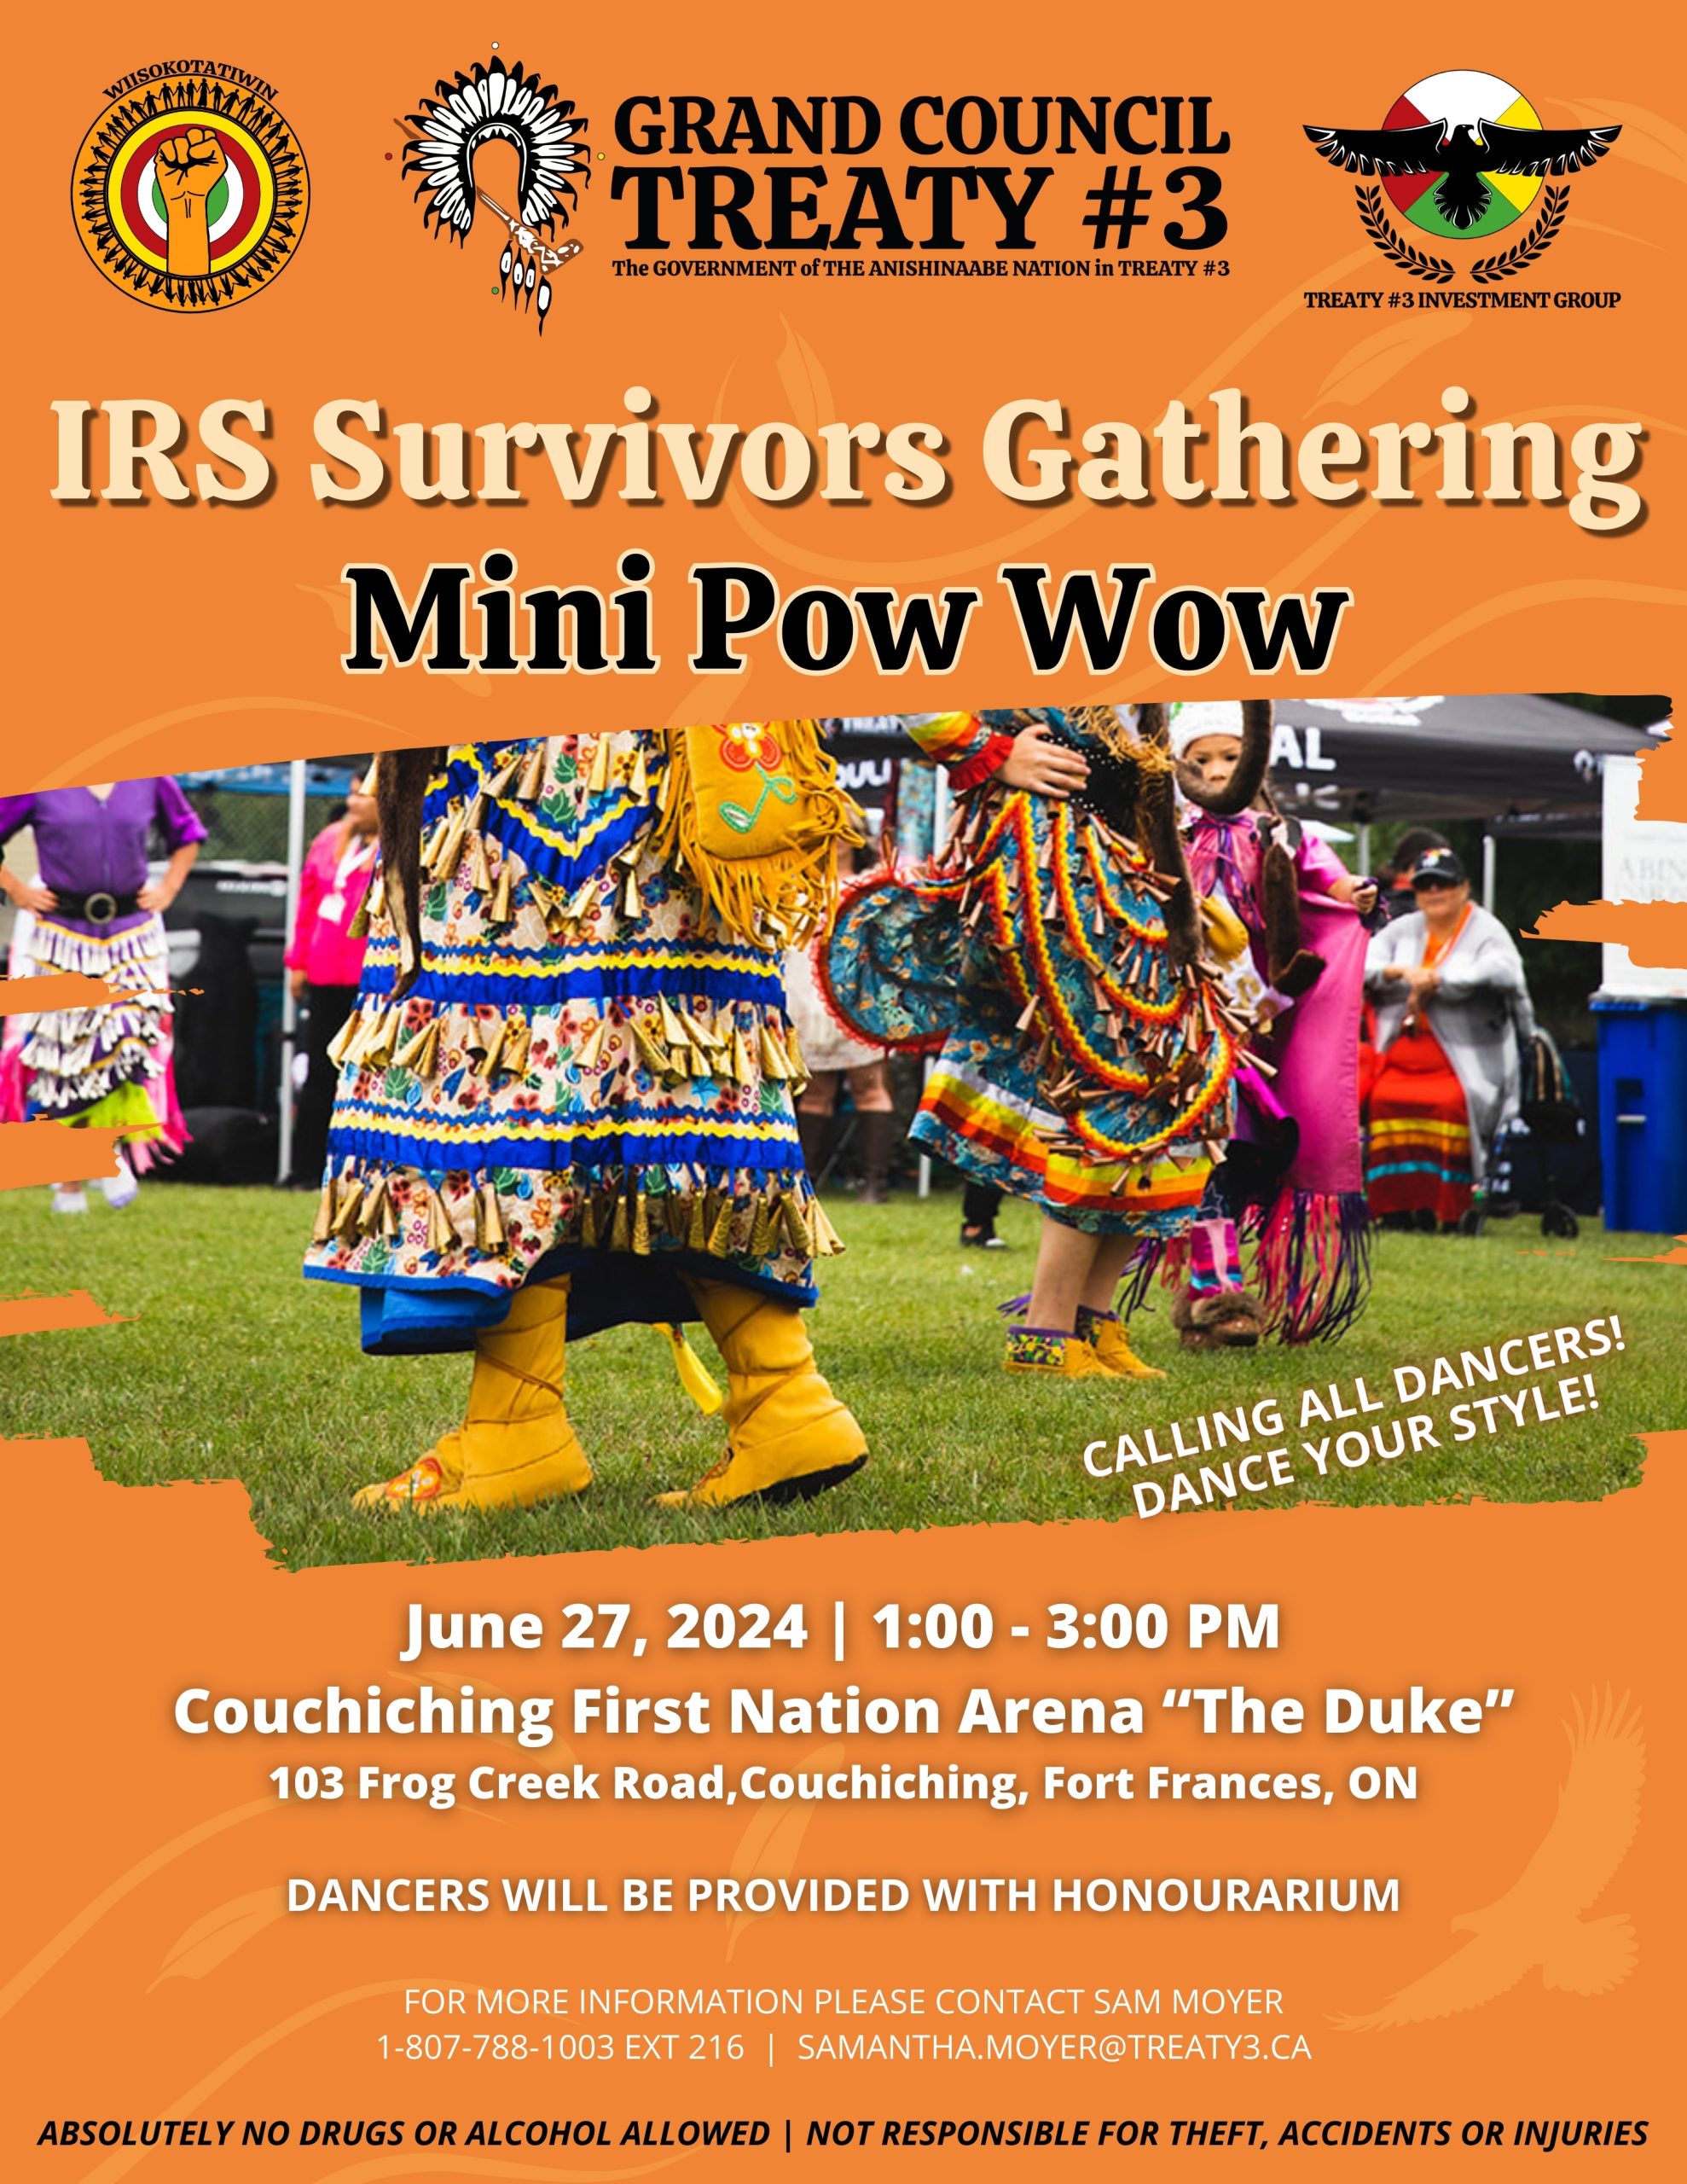 IRS Survivors Gathering Mini Pow Wow